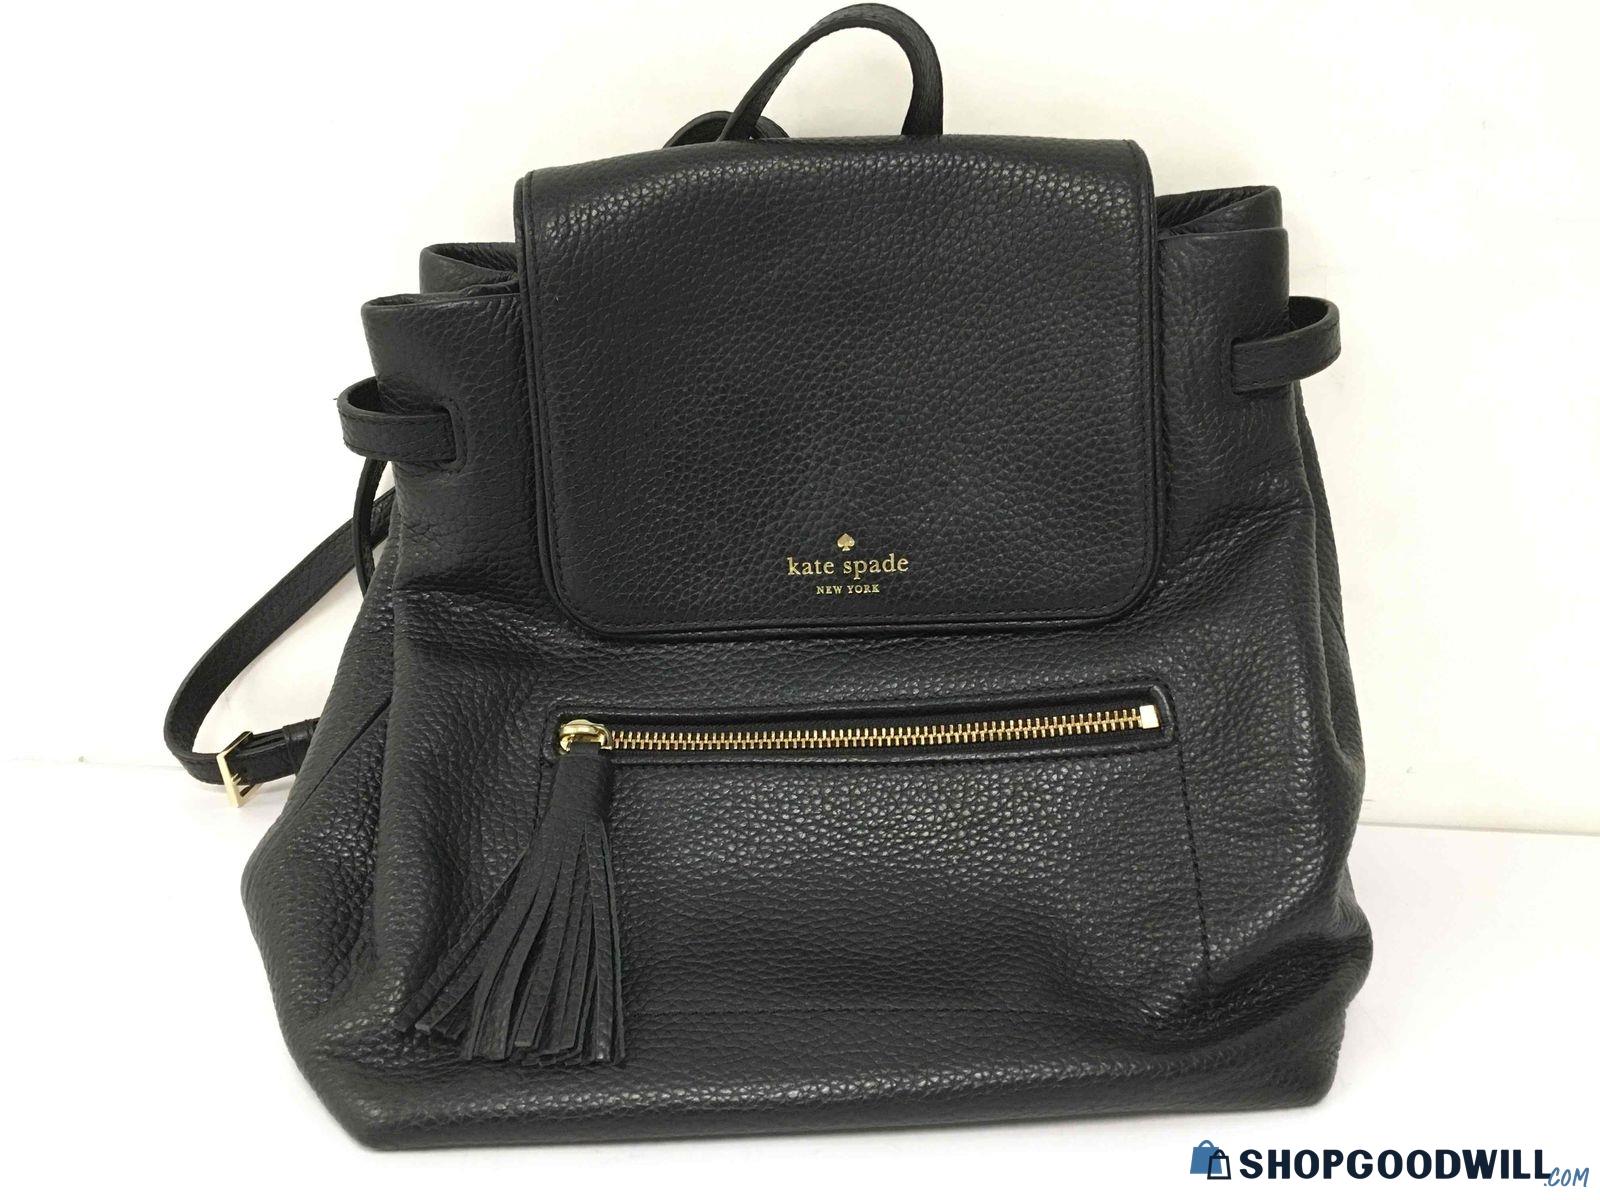 Kate Spade Women's Black Leather Backpack Tassel Purse - shopgoodwill.com